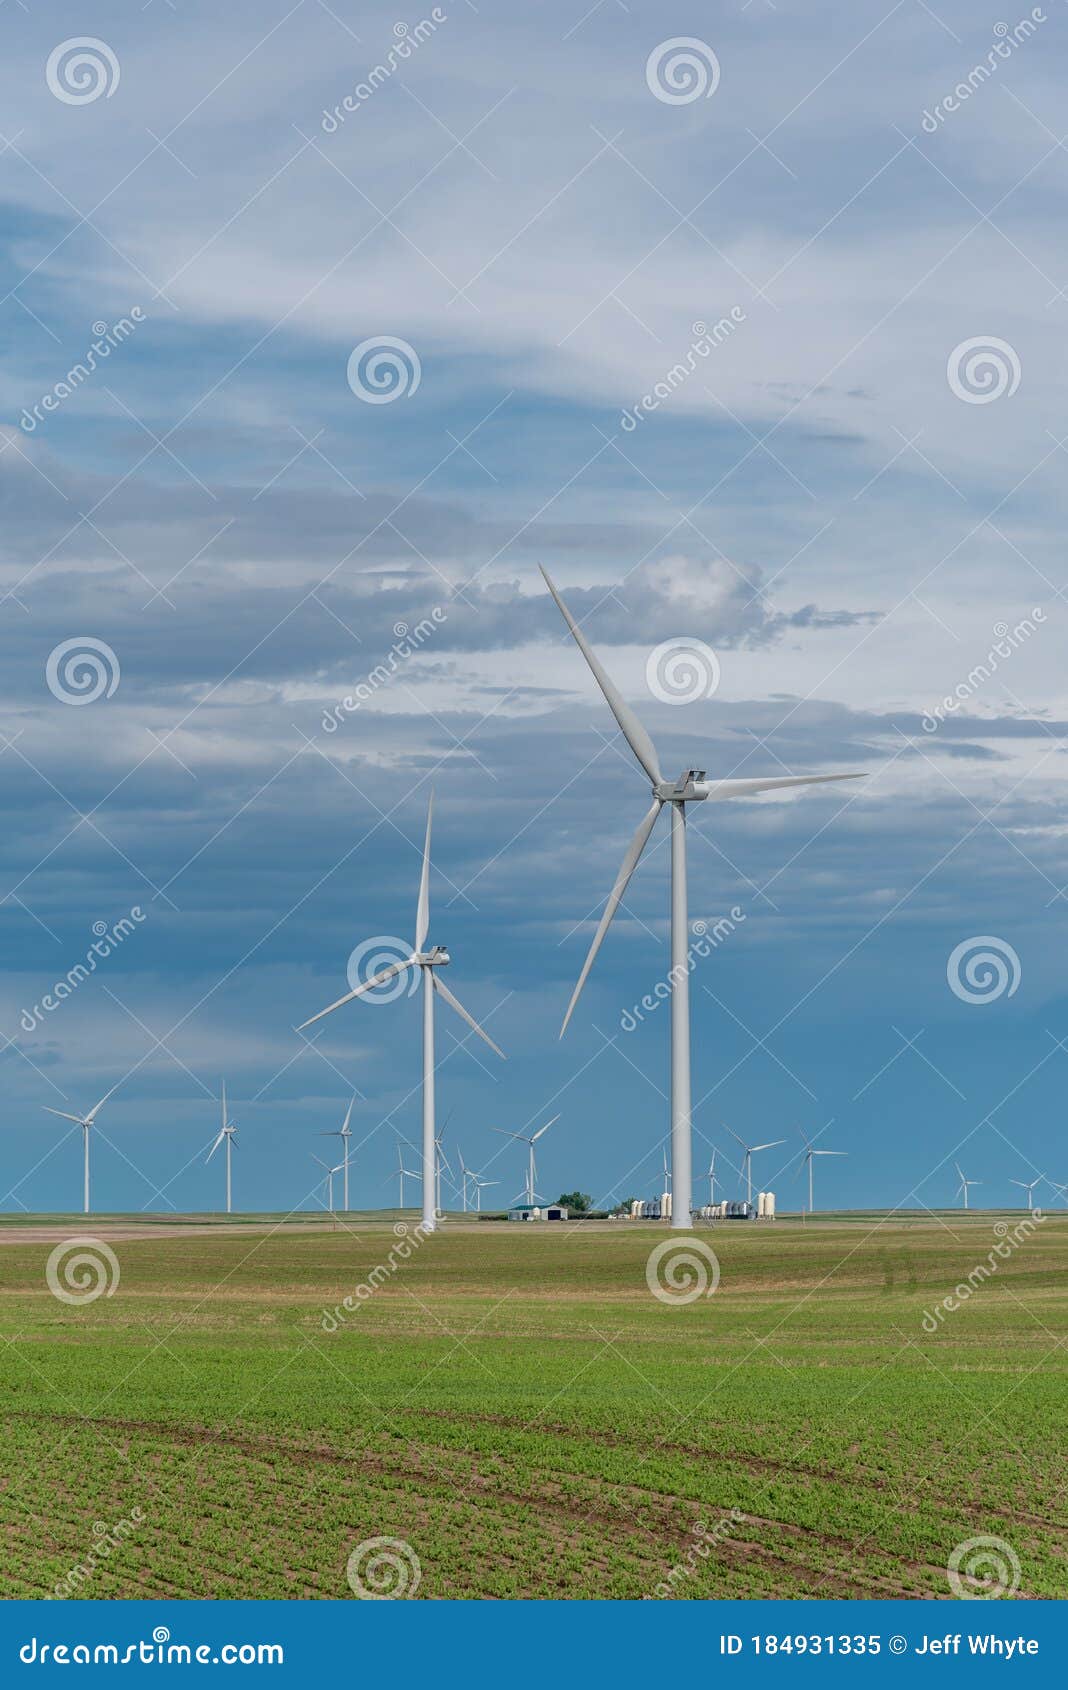 wind turbines located in south eastern alberta